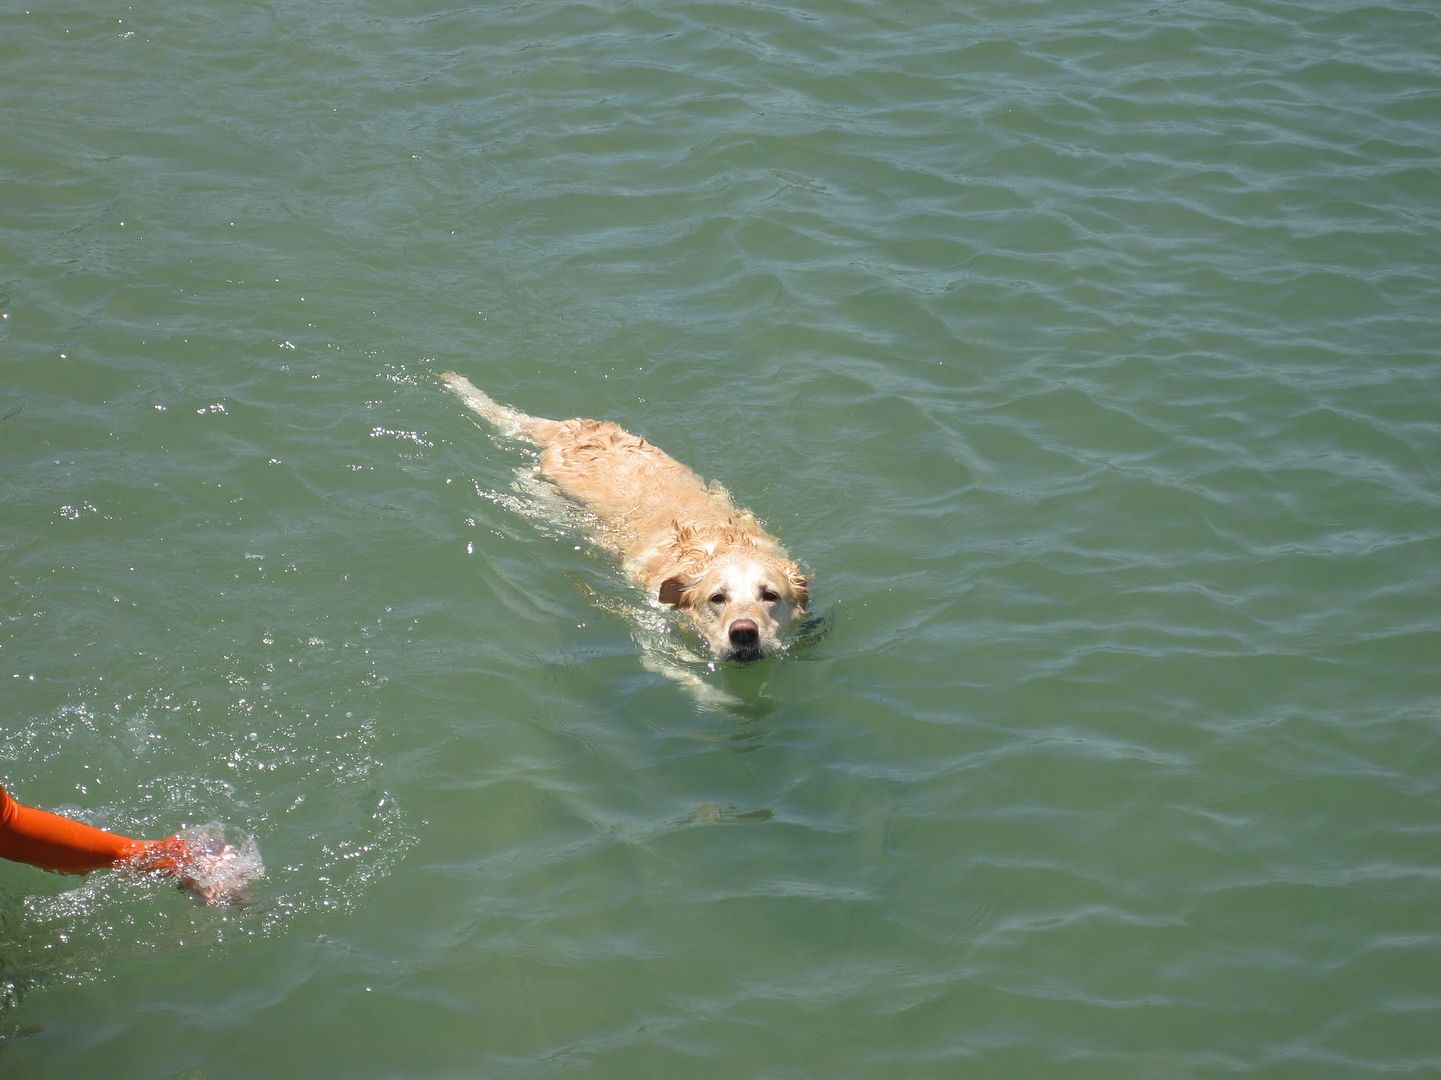 Meg the swimming dog